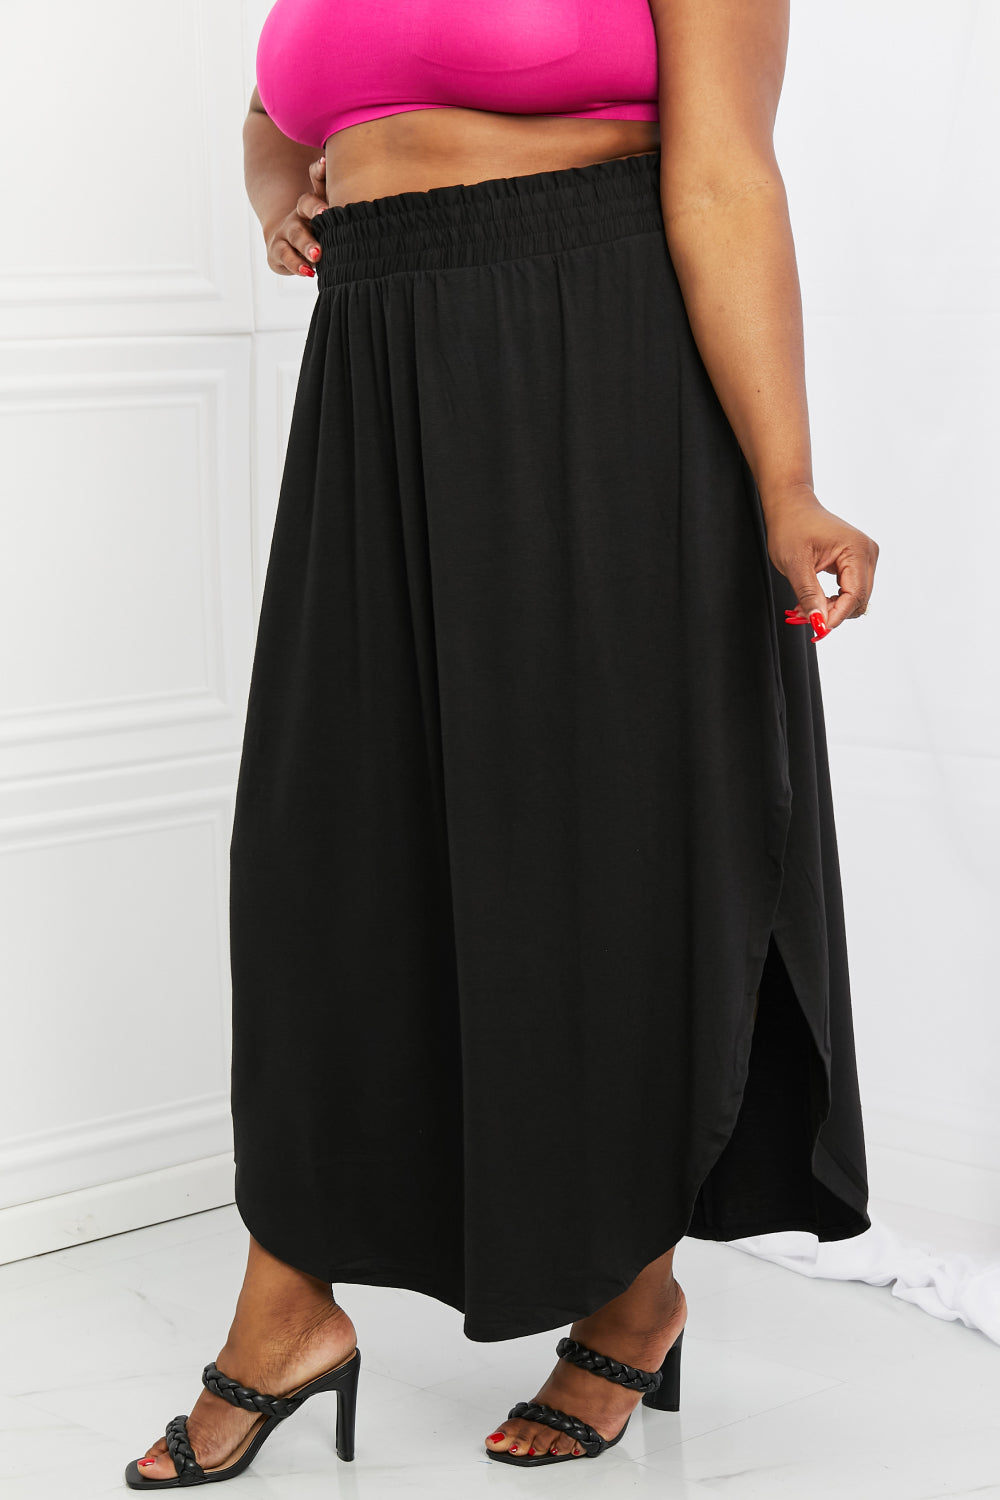 It's My Time Side Scoop Scrunch Skirt-Black Black Maxi Skirts by Vim&Vigor | Vim&Vigor Boutique